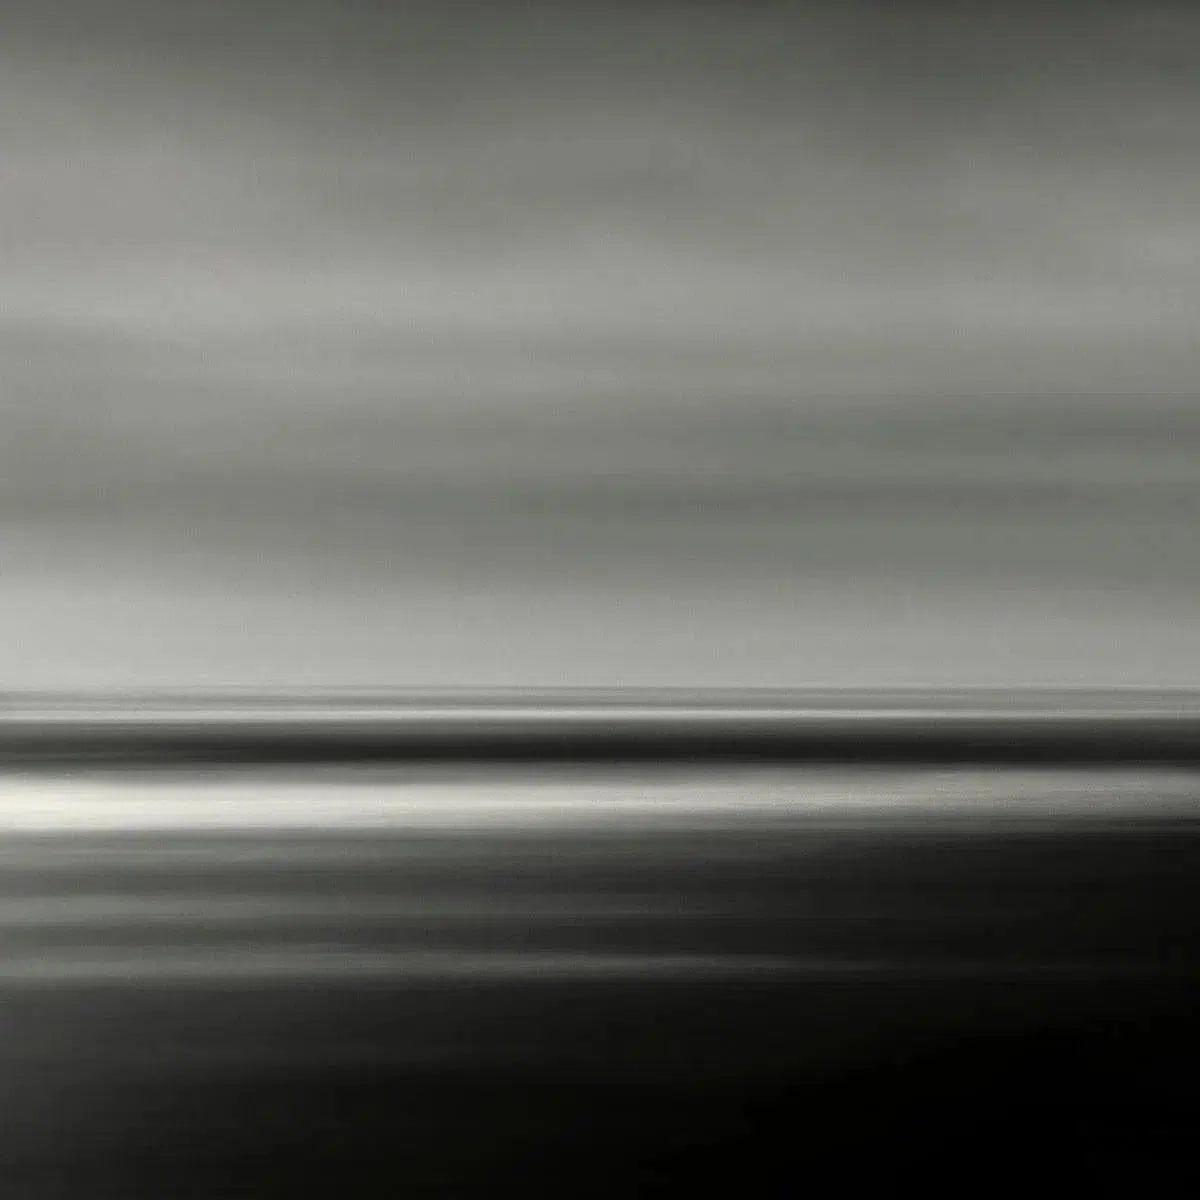 A Black Line, by Christina Craemer-PurePhoto